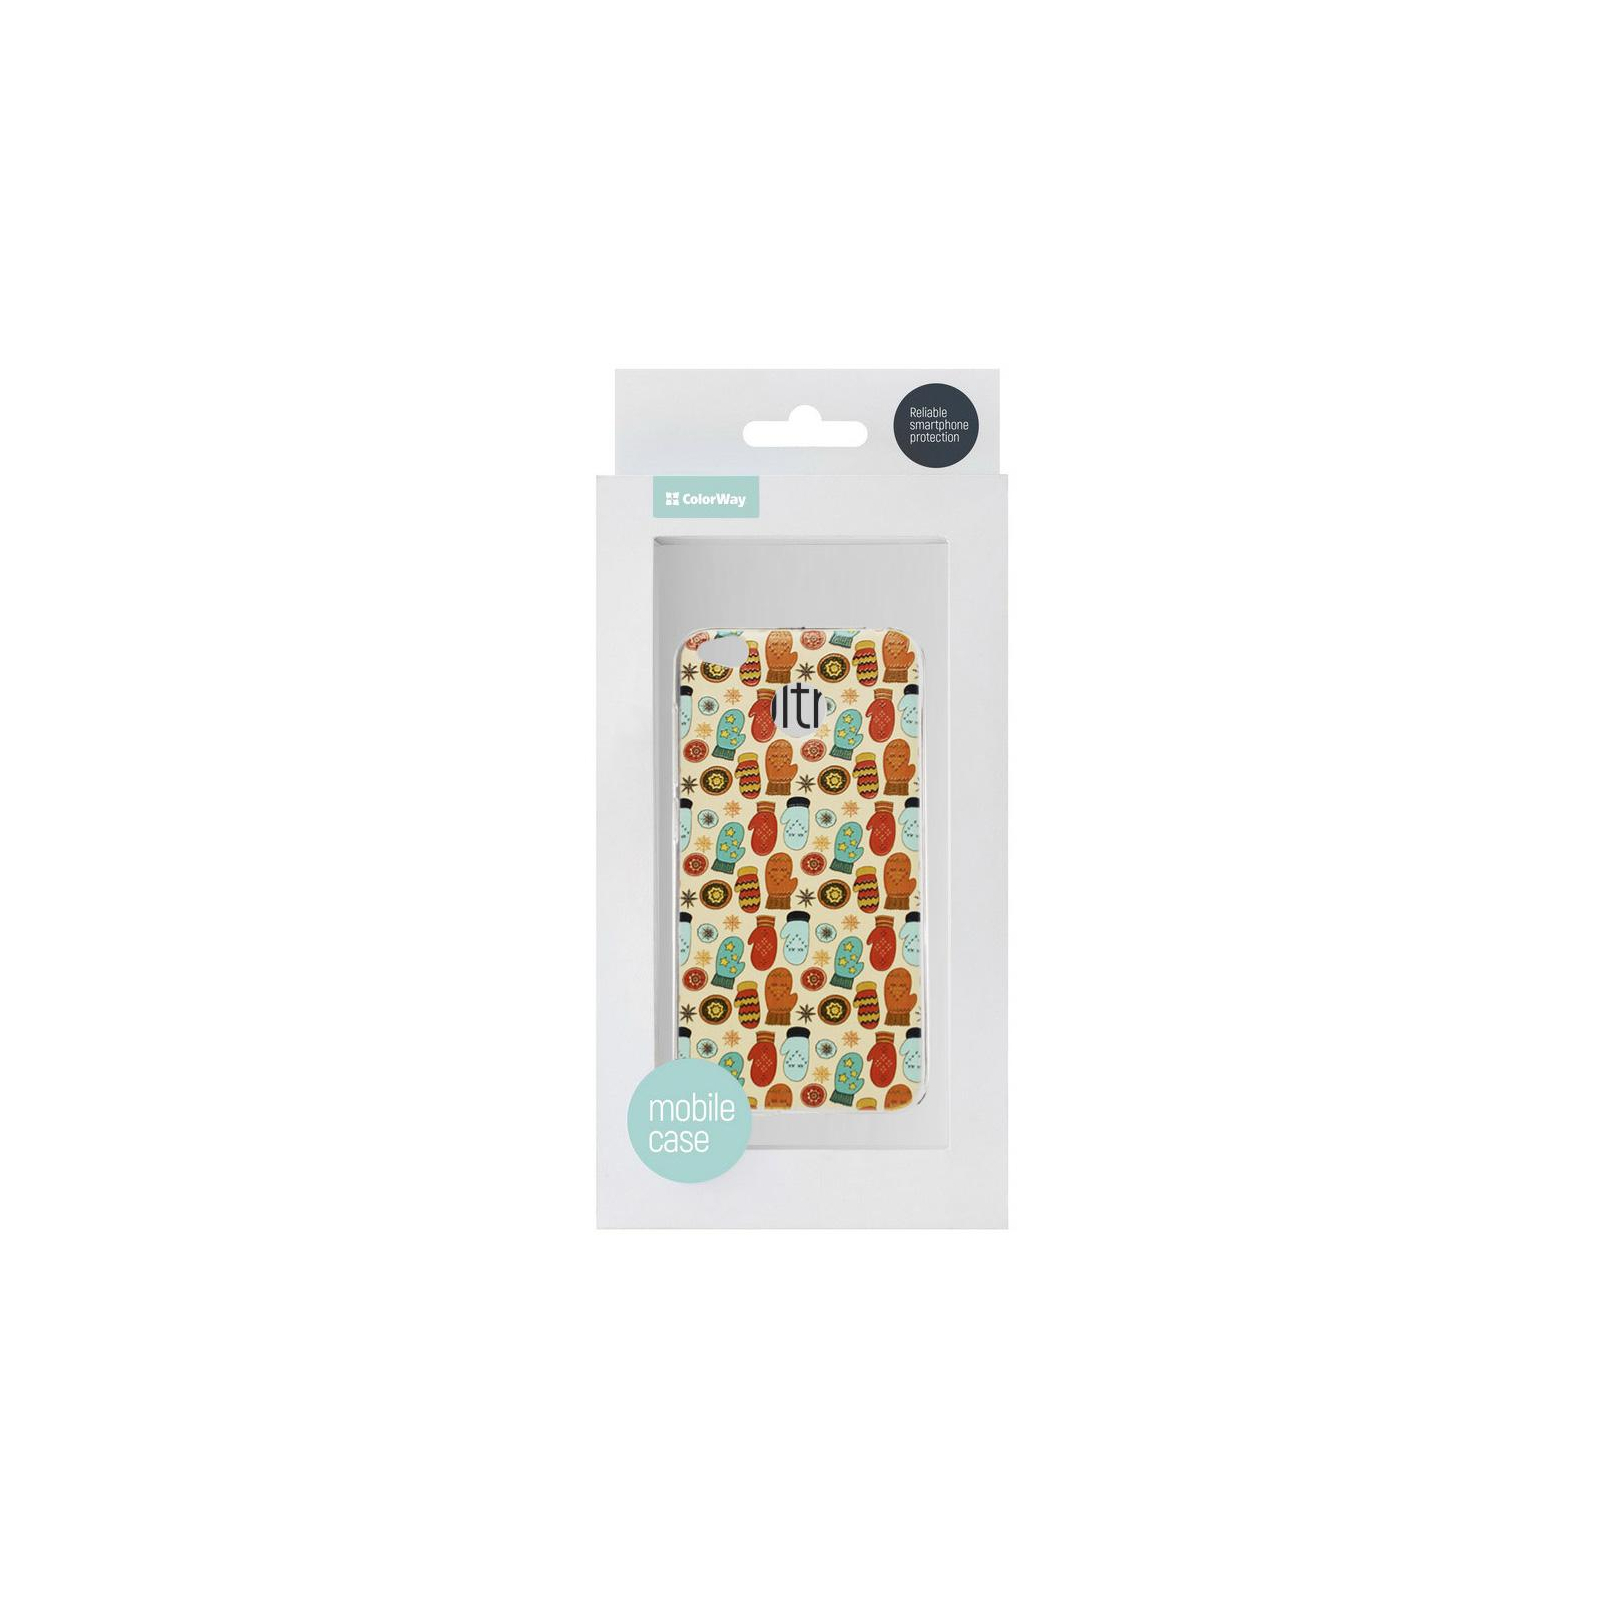 Чехол для мобильного телефона ColorWay ultrathin TPU case for Xiaomi Redmi 4X, pic. А014 (CW-CTPXR4X-TRS) изображение 5